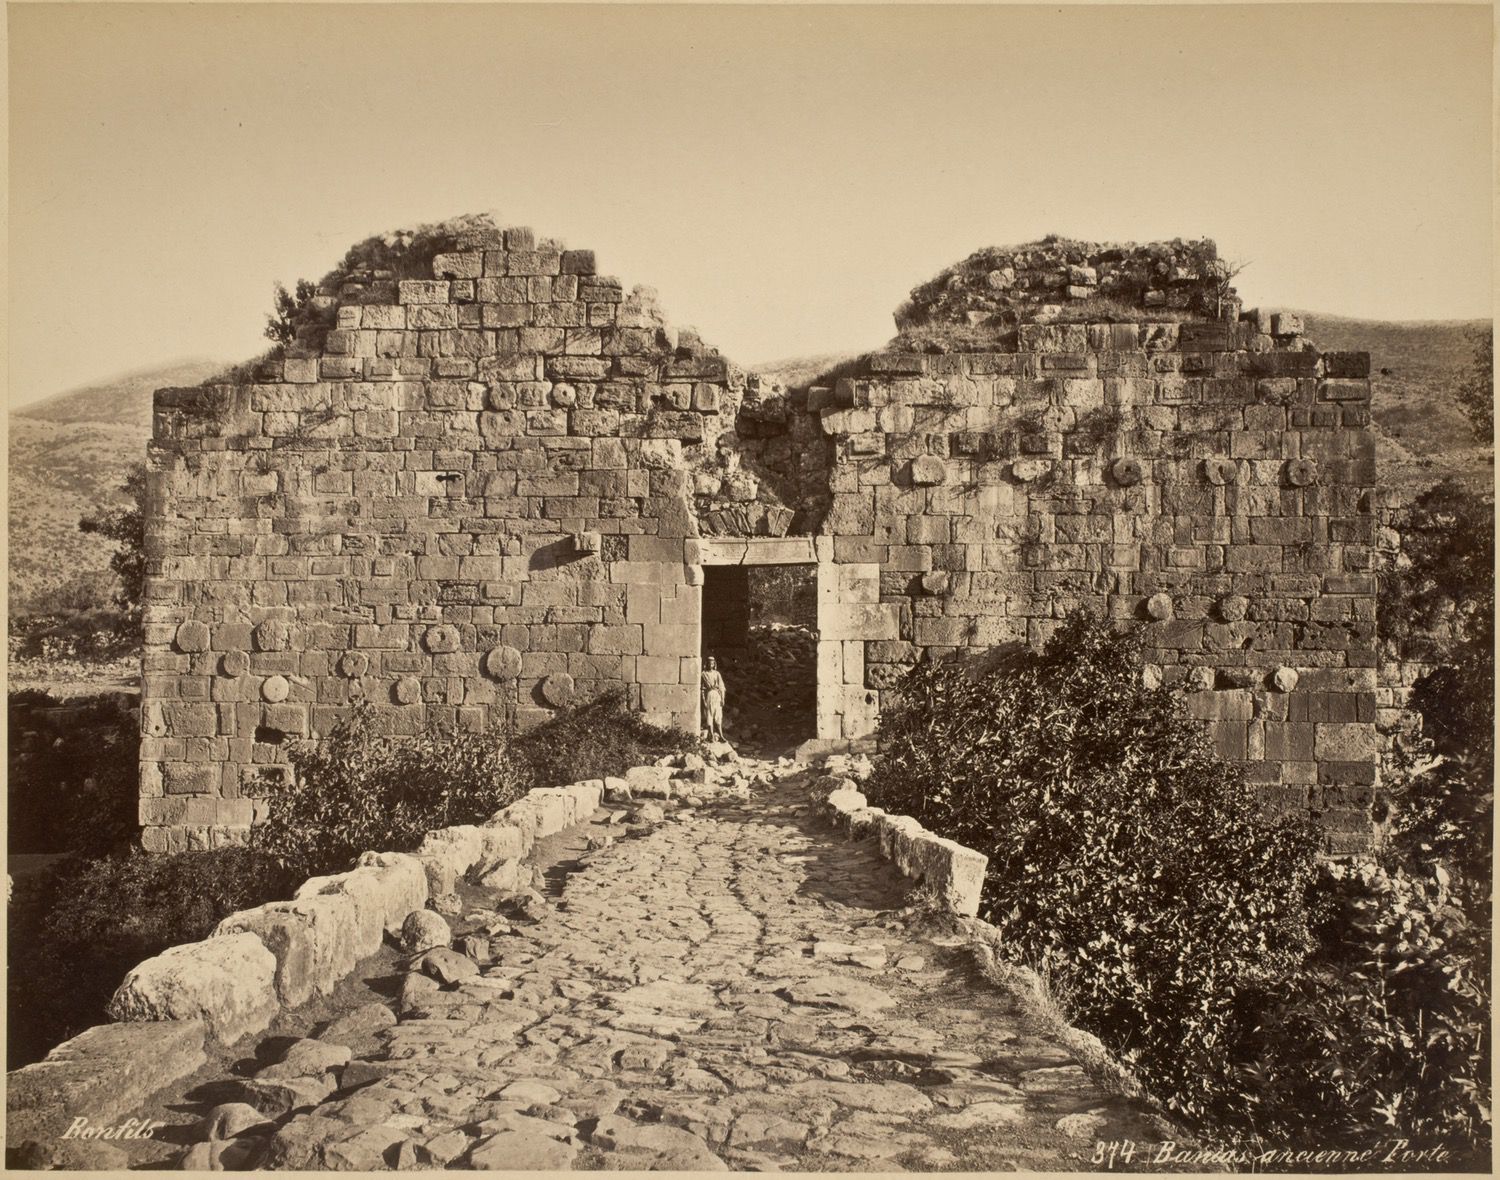 Banias - ancienne Porte - Translated: Banias - Ancient Gate